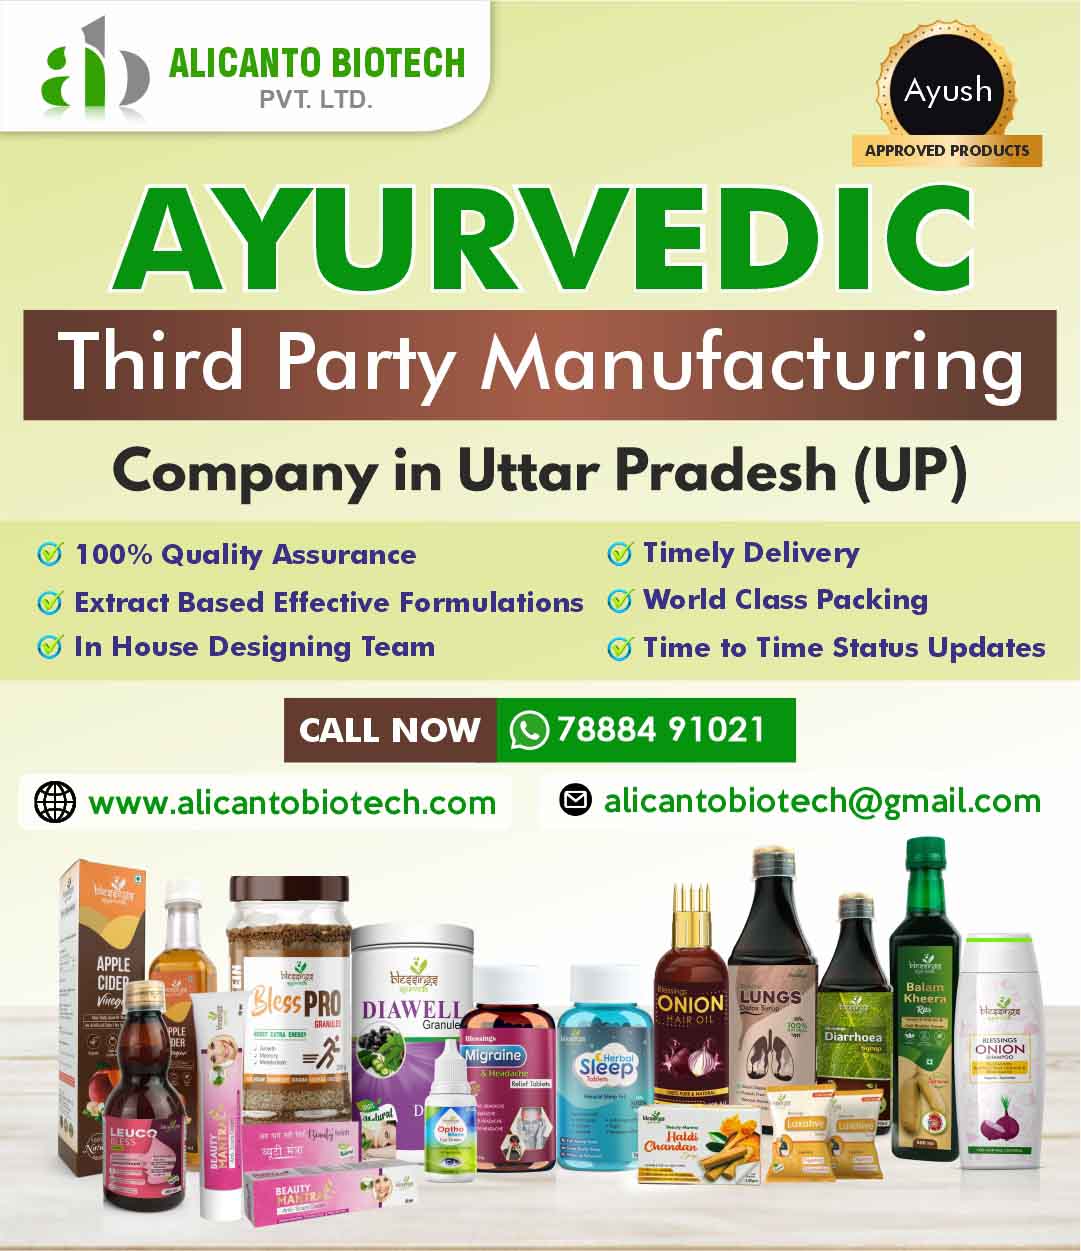 Ayurvedic Third Party Manufacturing Company in Uttar Pradesh - Alicanto Biotech